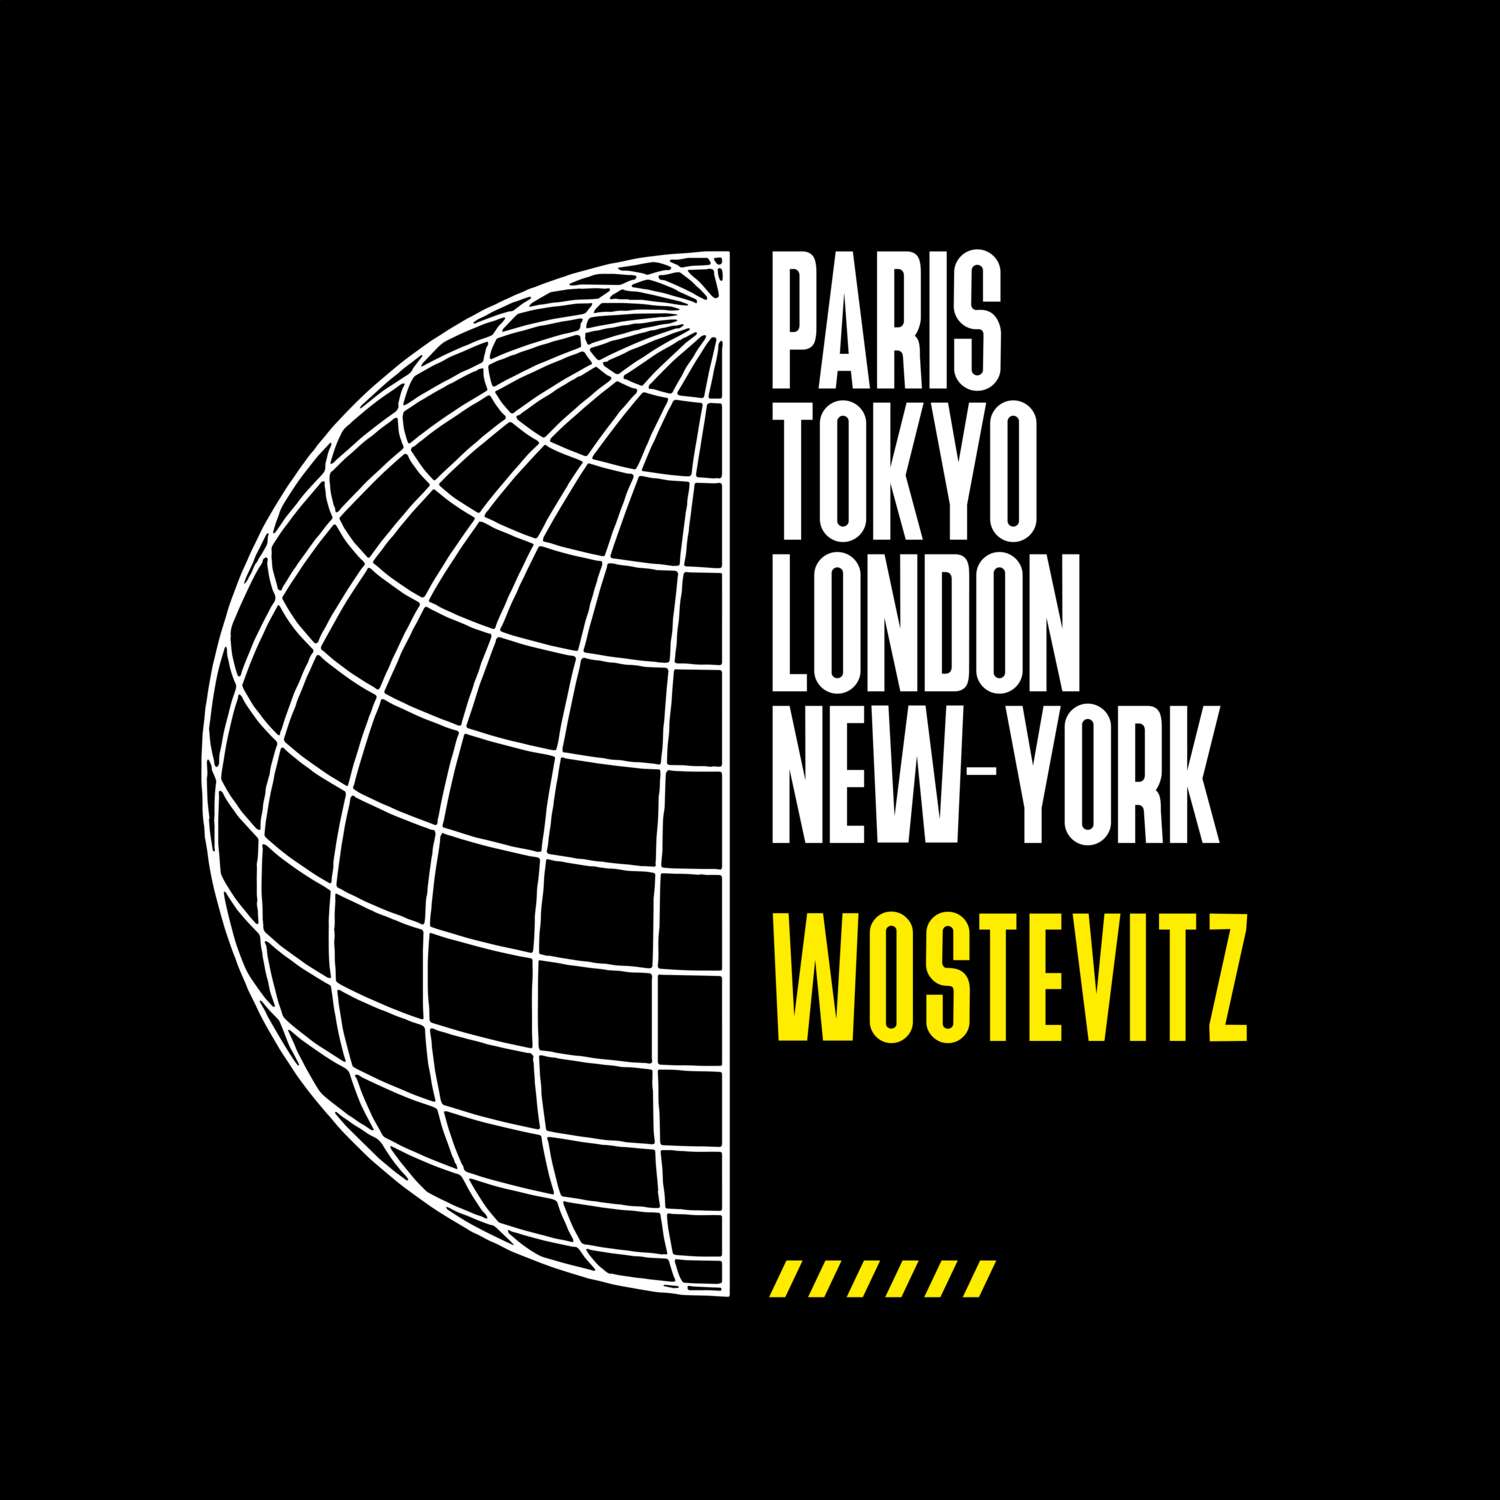 Wostevitz T-Shirt »Paris Tokyo London«